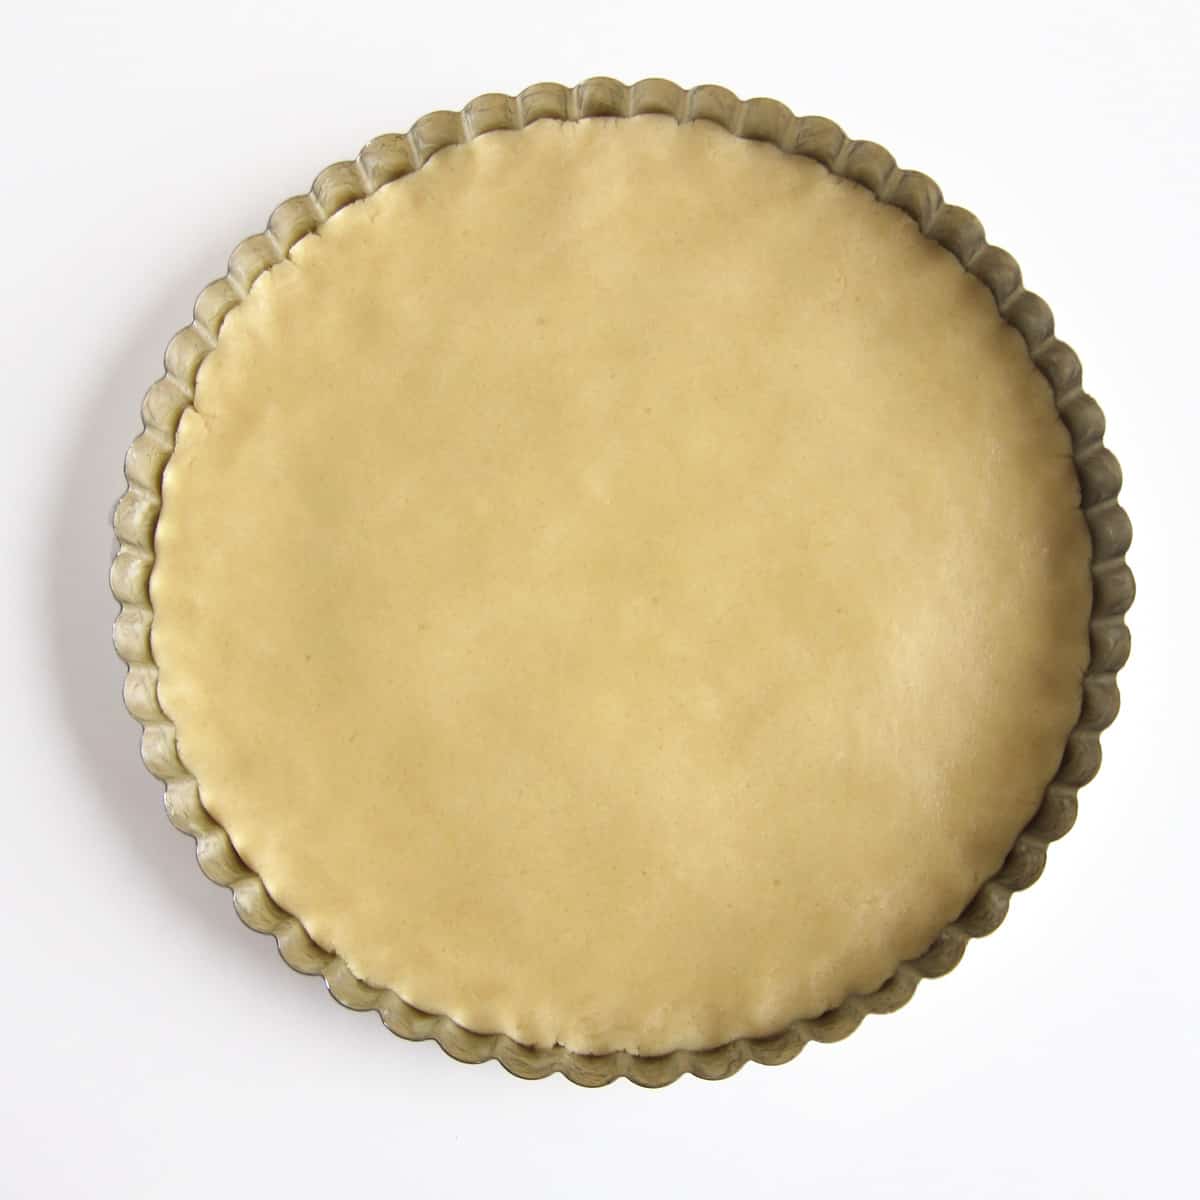 sugar cookie dough pressed into a round cake pan